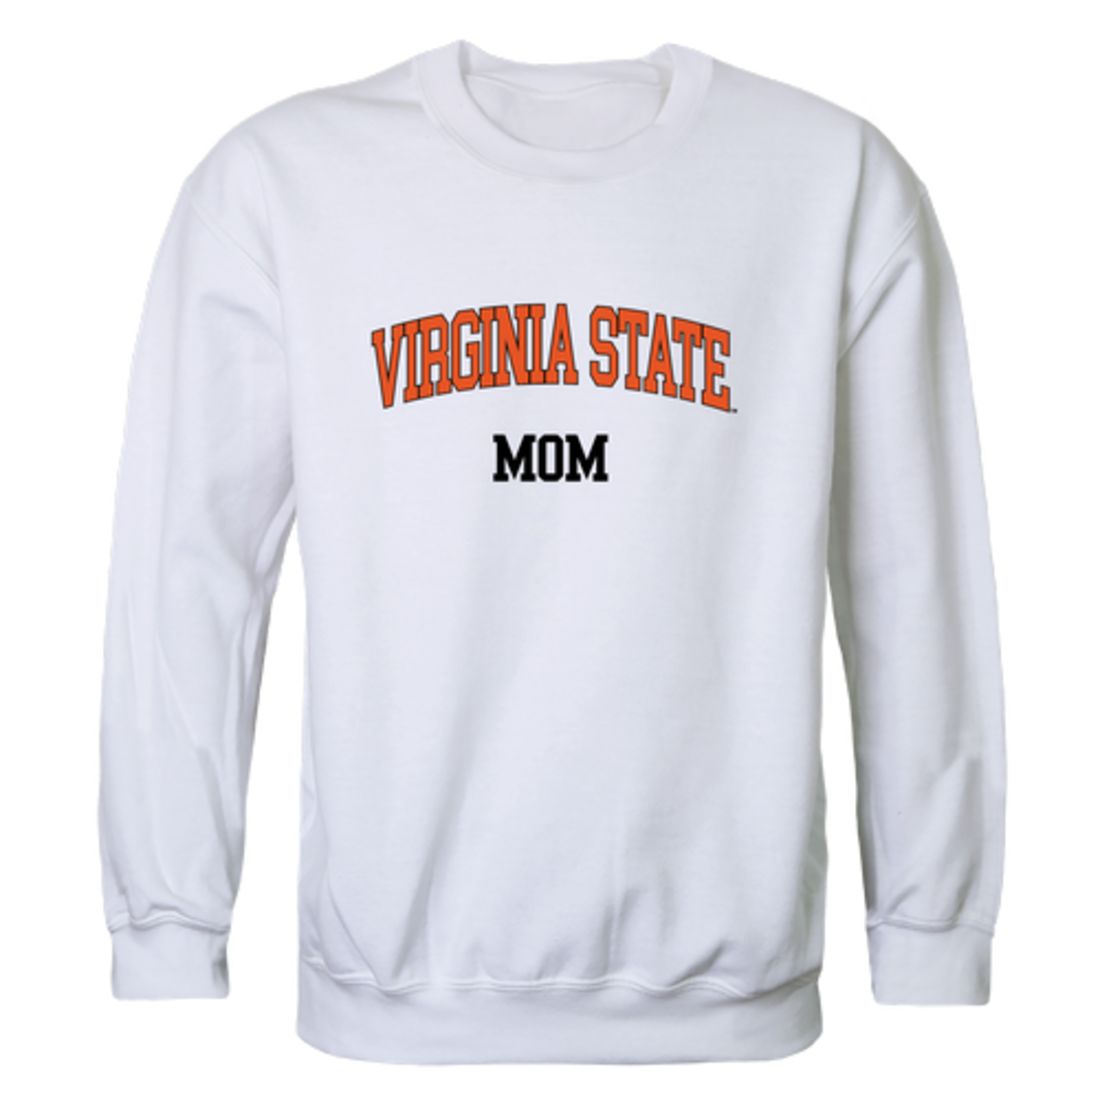 Virginia State University Trojans Mom Fleece Crewneck Pullover Sweatshirt